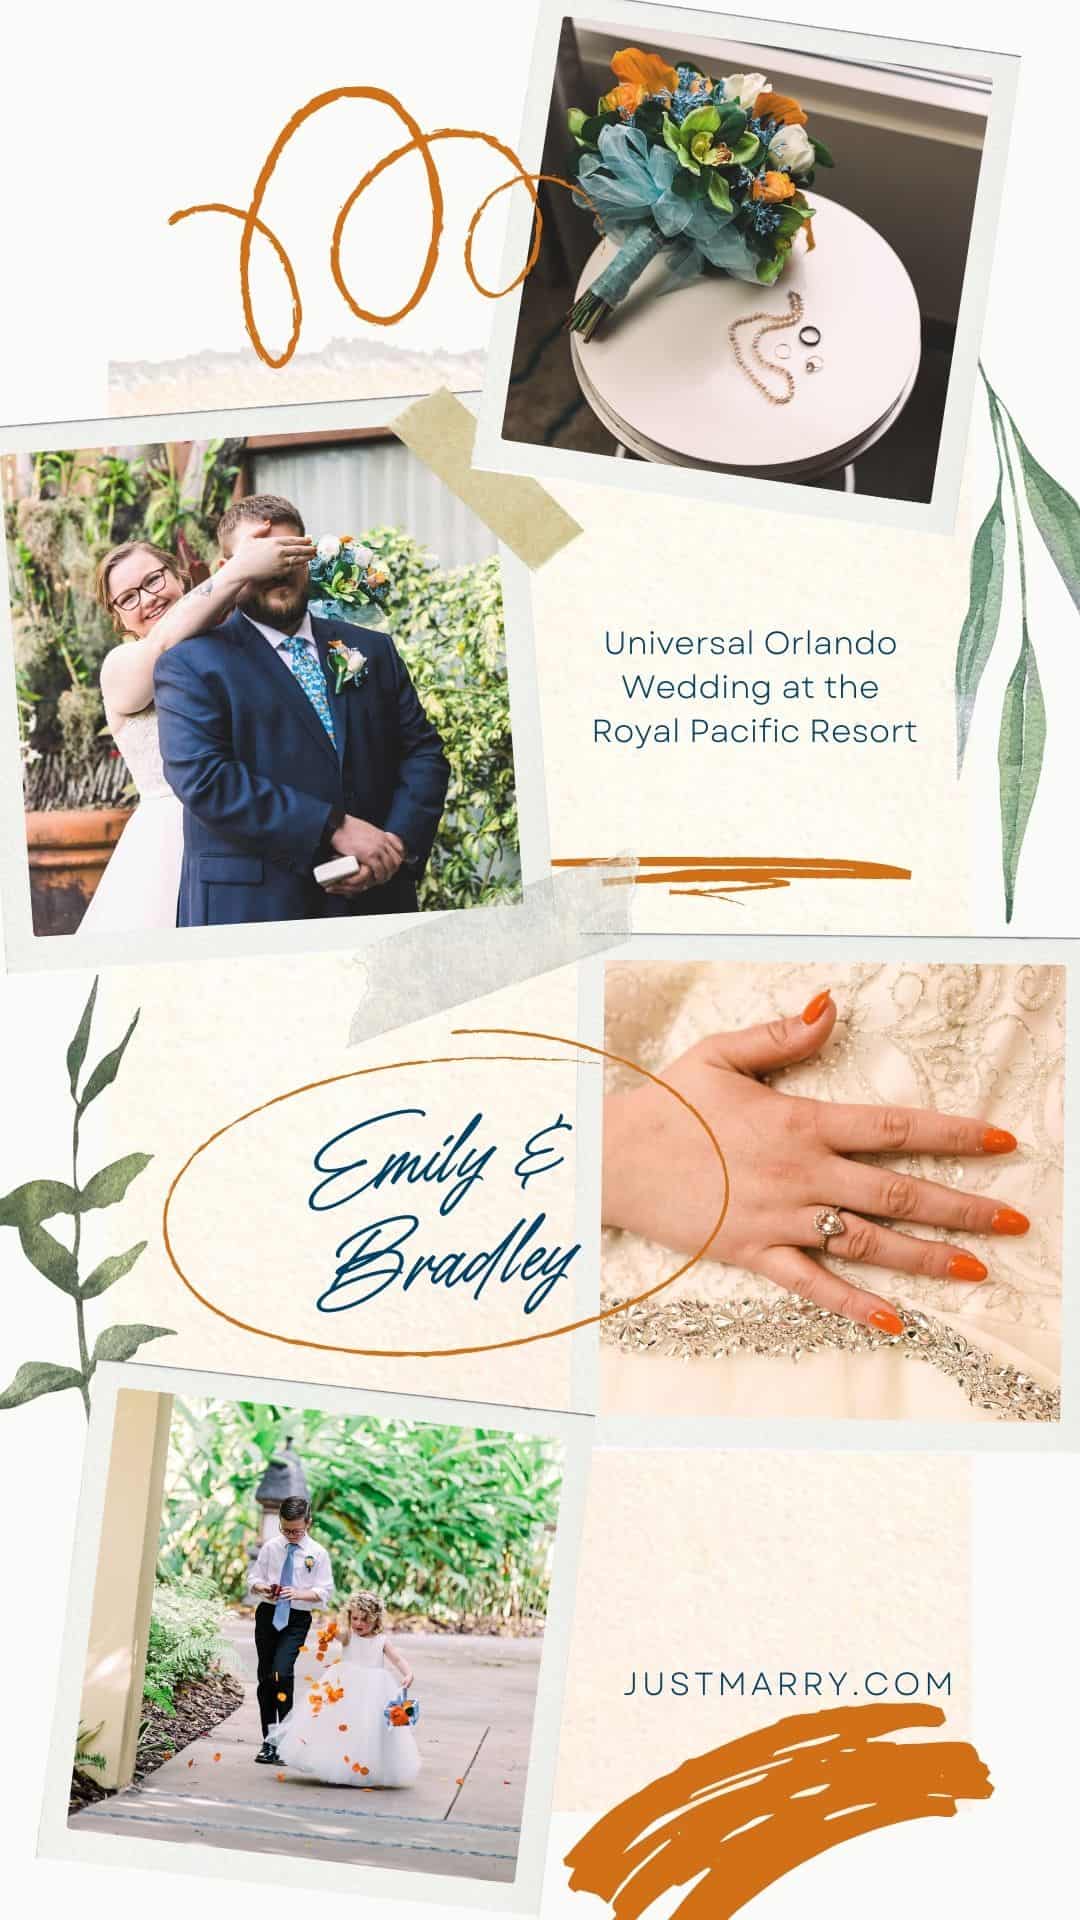 Universal Orlando Wedding - Just Marry Weddings - Anna So Photography - Pinterest Graphic